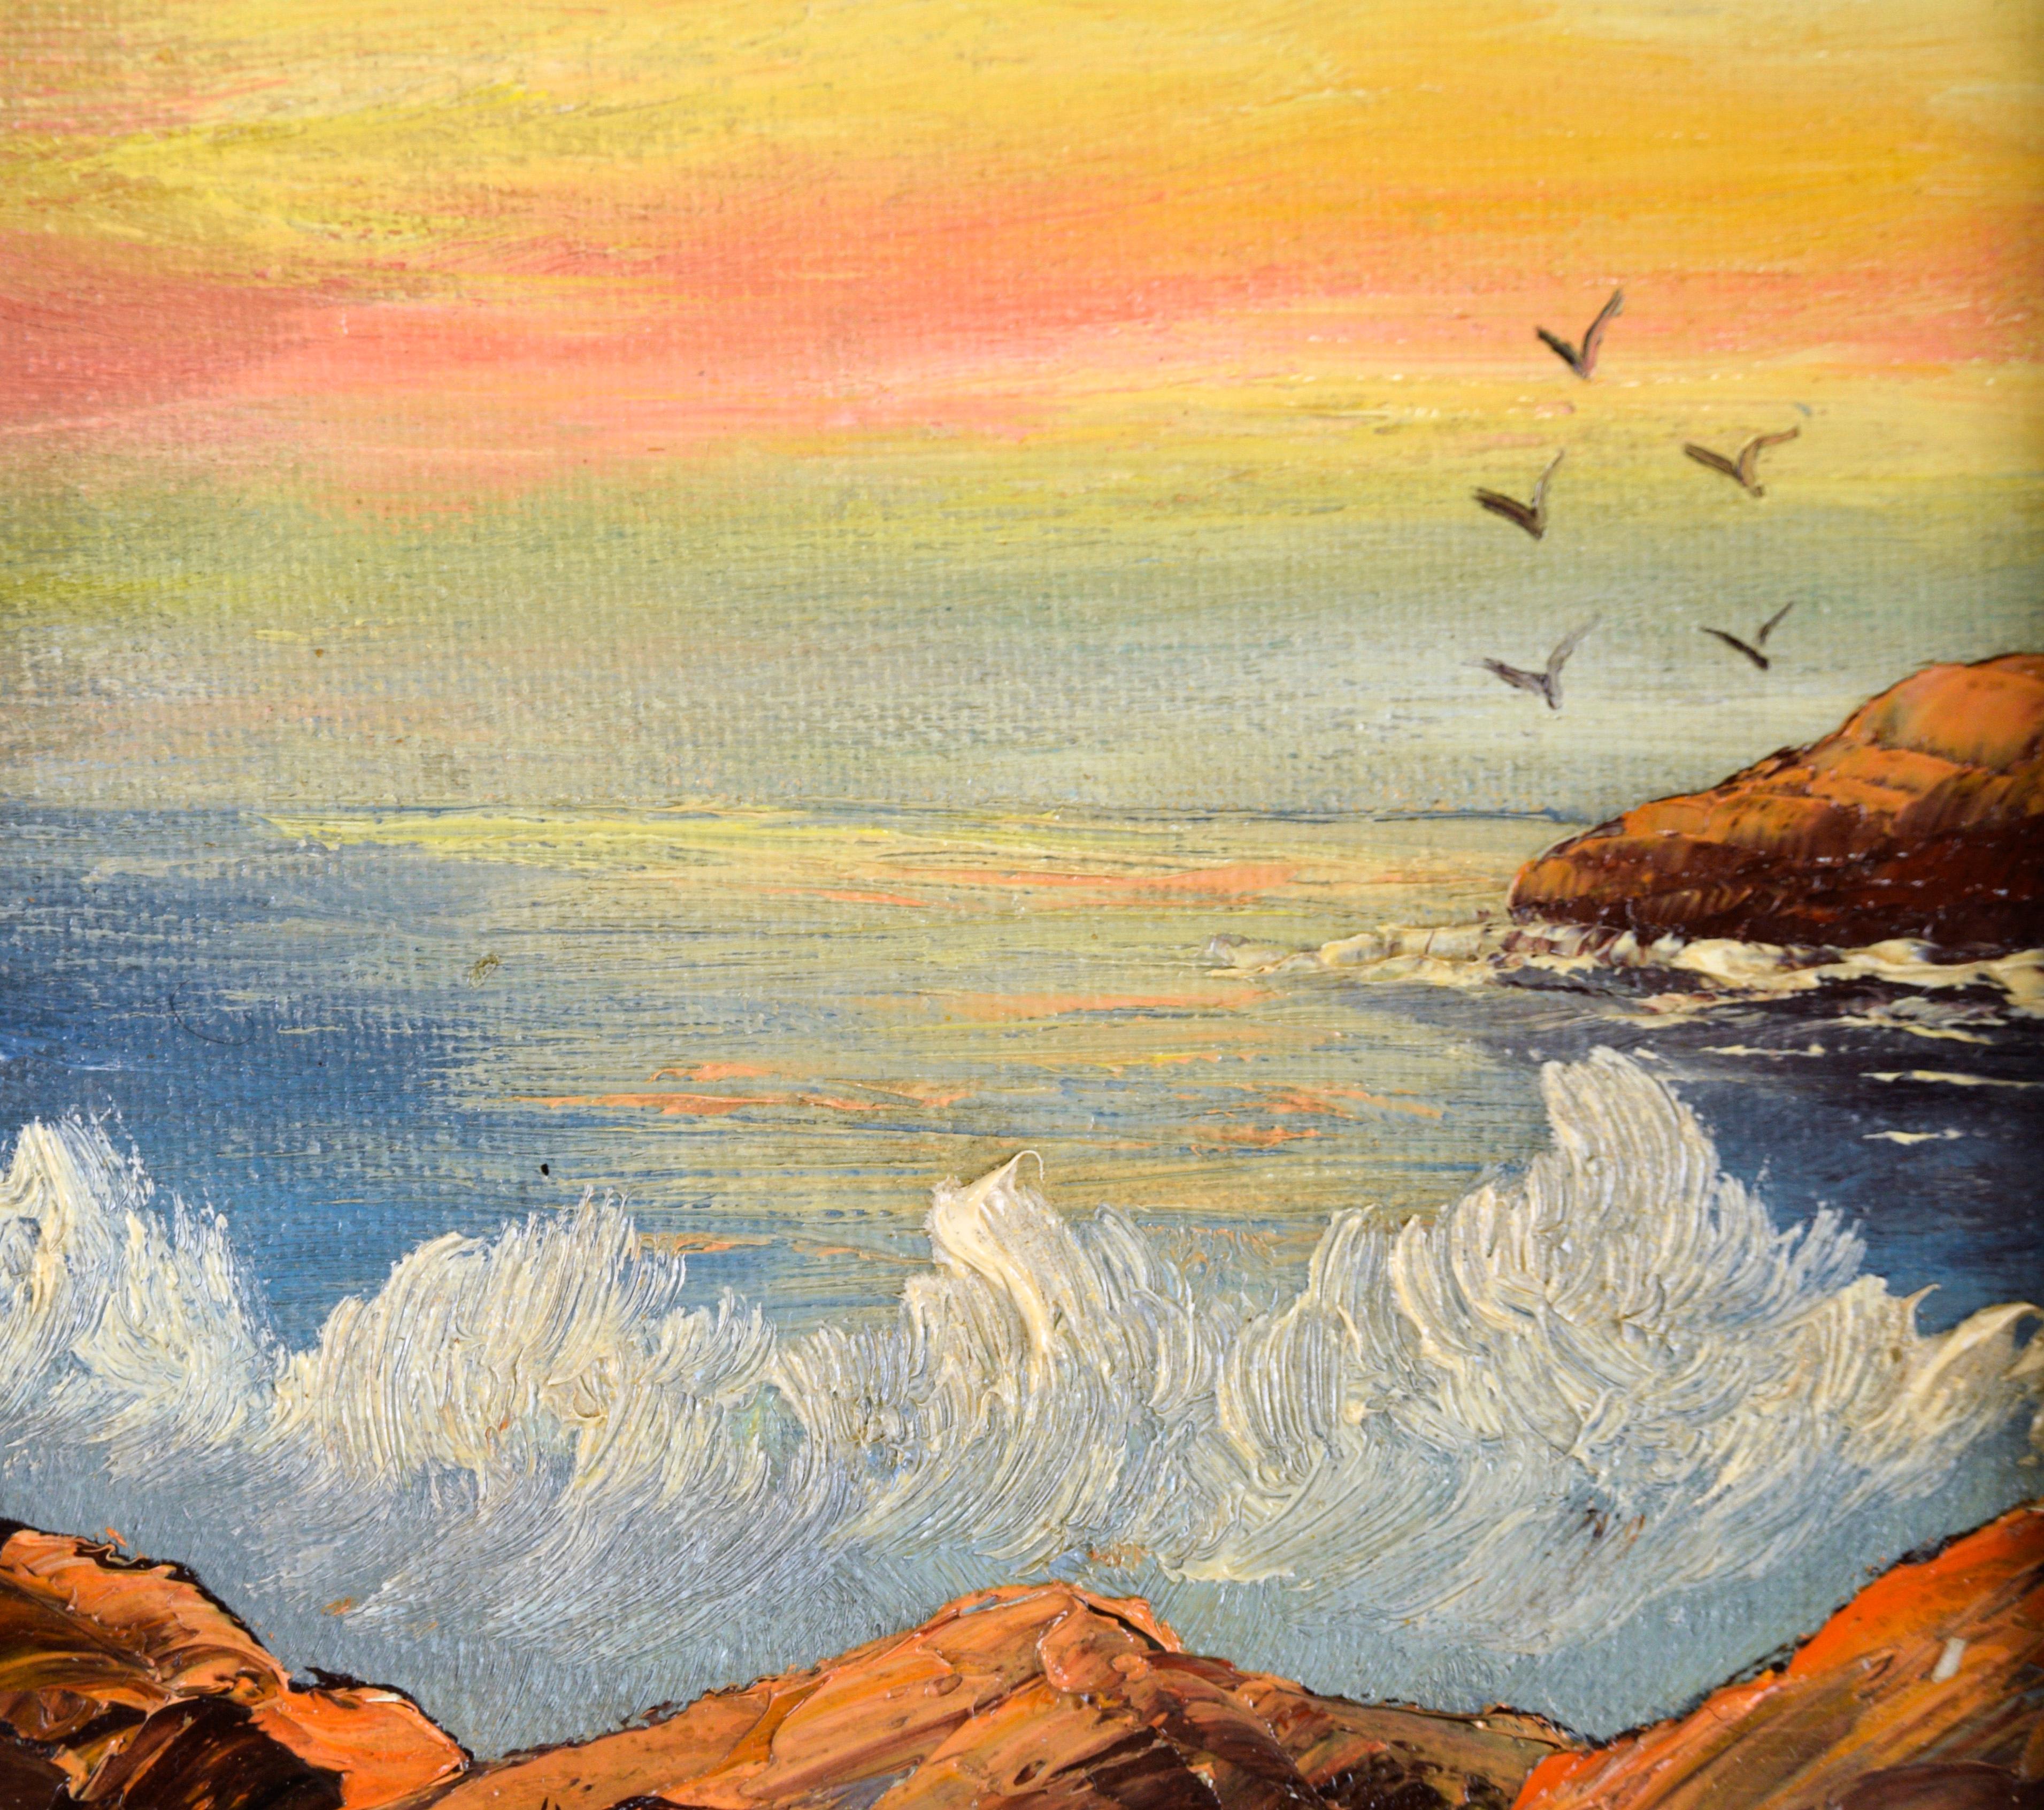 Ocean Splash at Sunset - Small Plein Air Oil Painting on Canvas 2